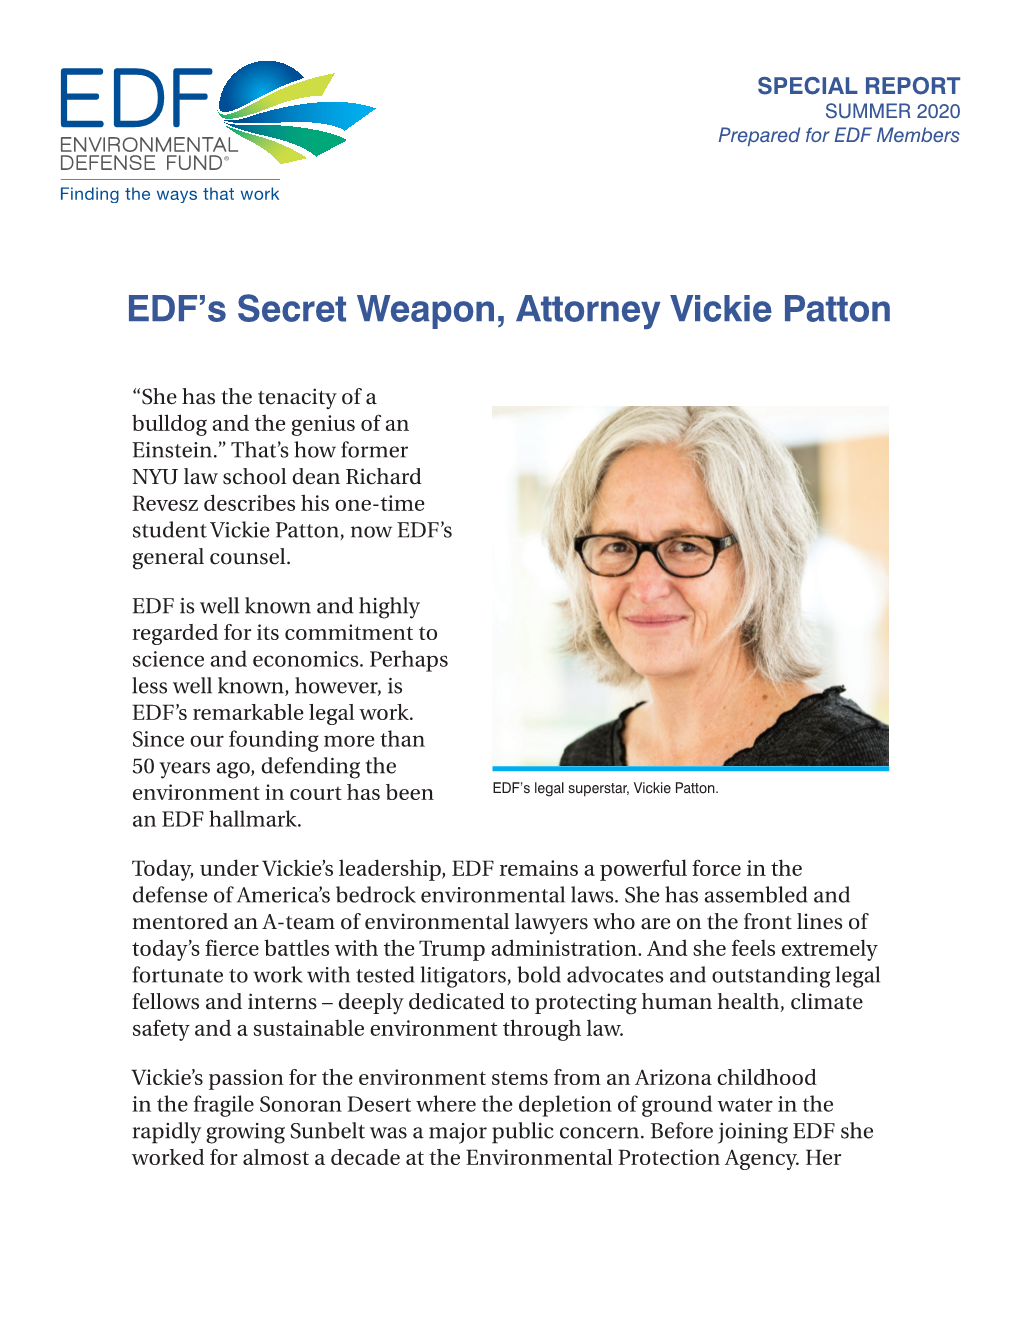 EDF's Secret Weapon, Attorney Vickie Patton